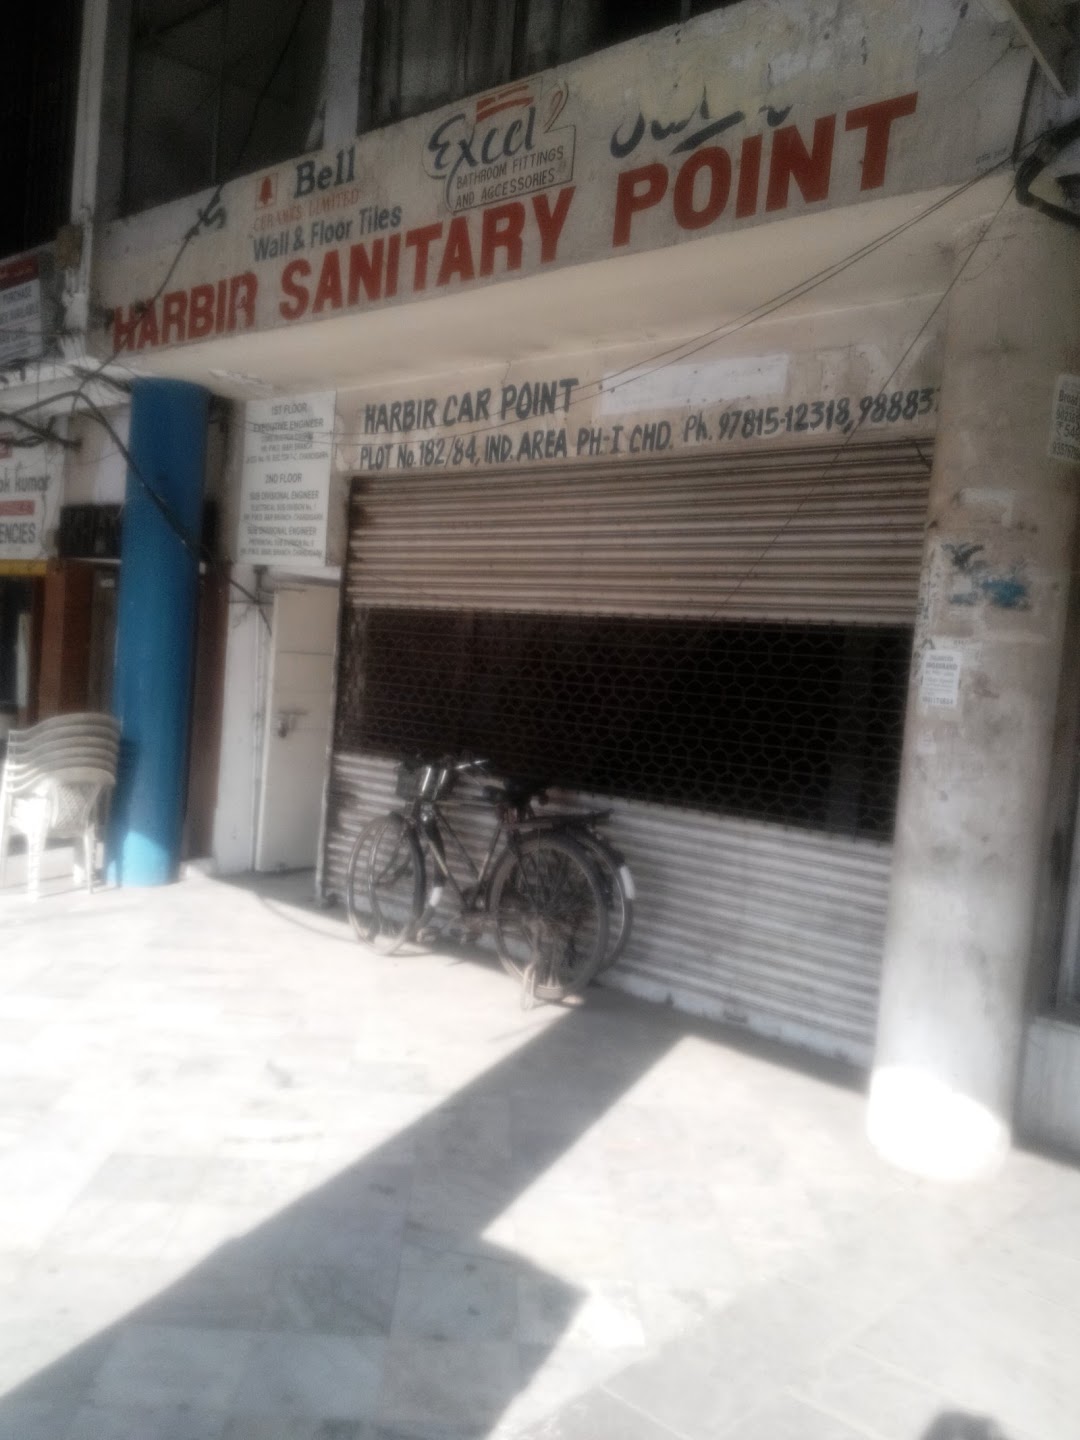 Harbir Sanitary Point